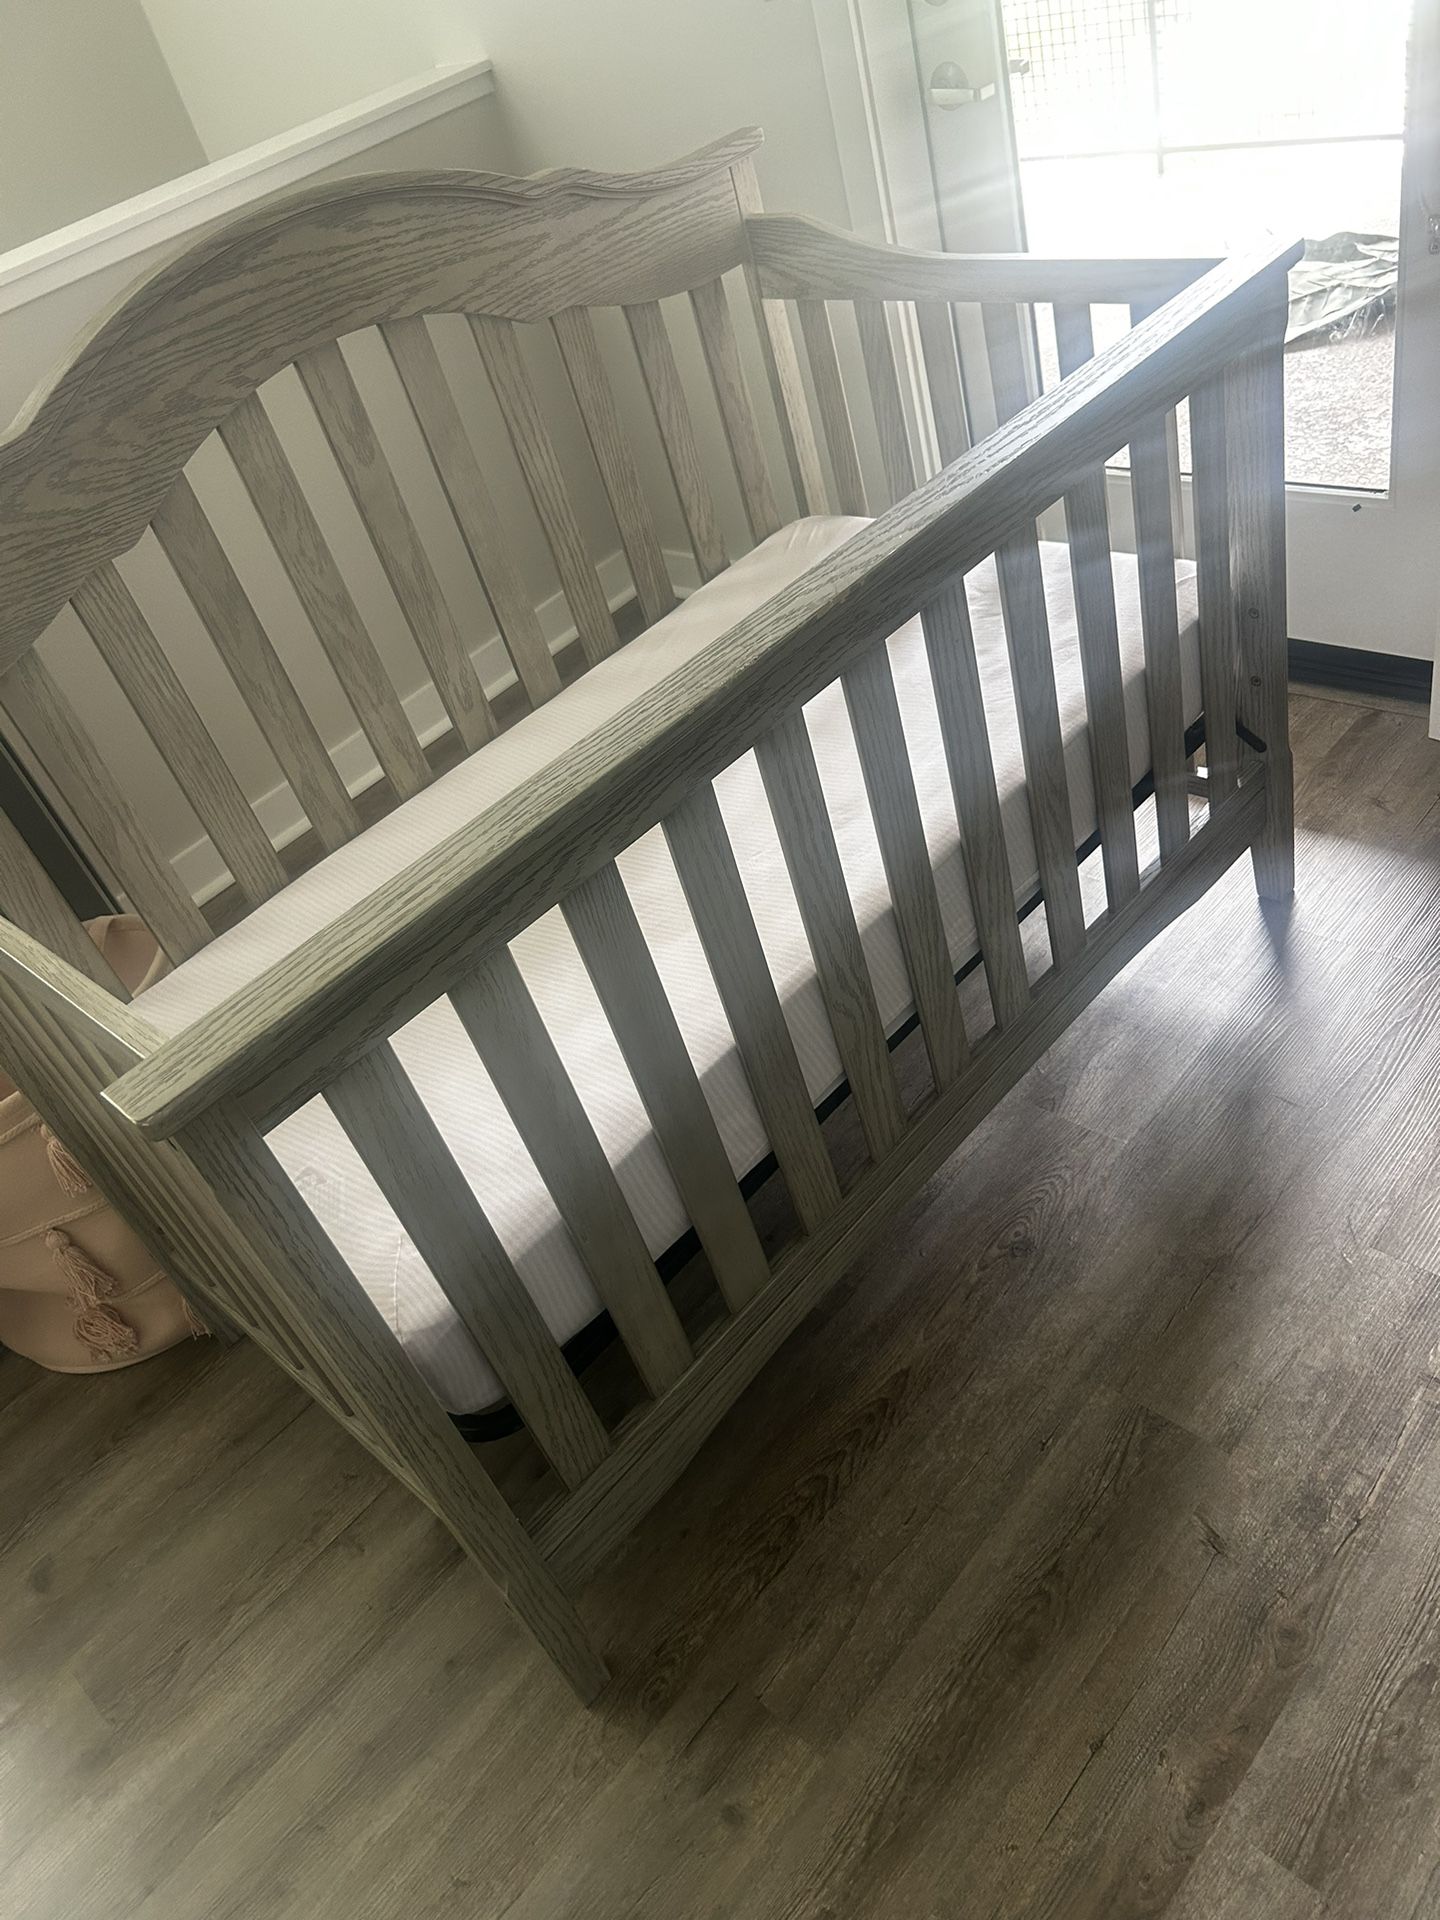 Baby Crib & Matching Change Table Dresser Combo